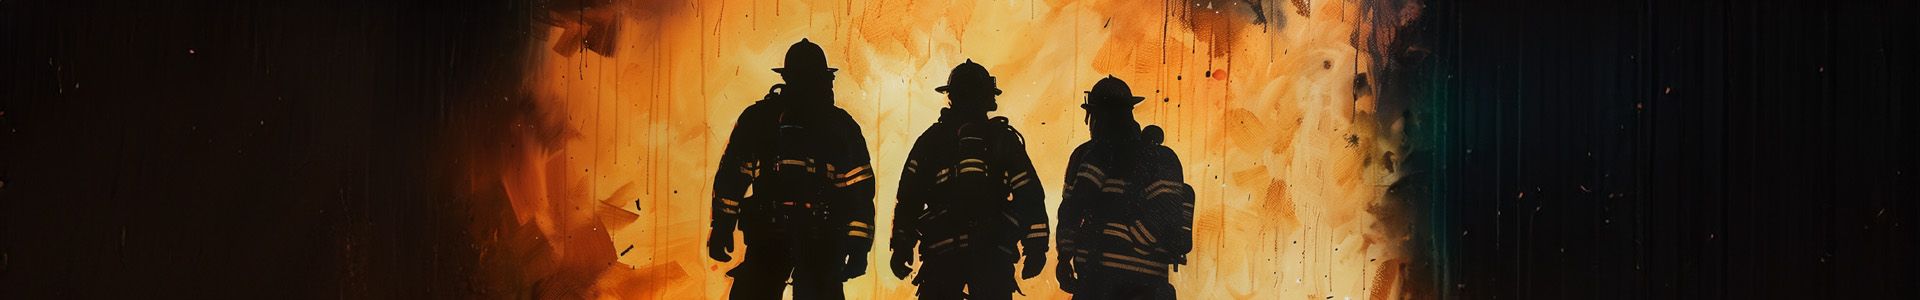 RedNMX Dispatch Case Study Firefighters Responding